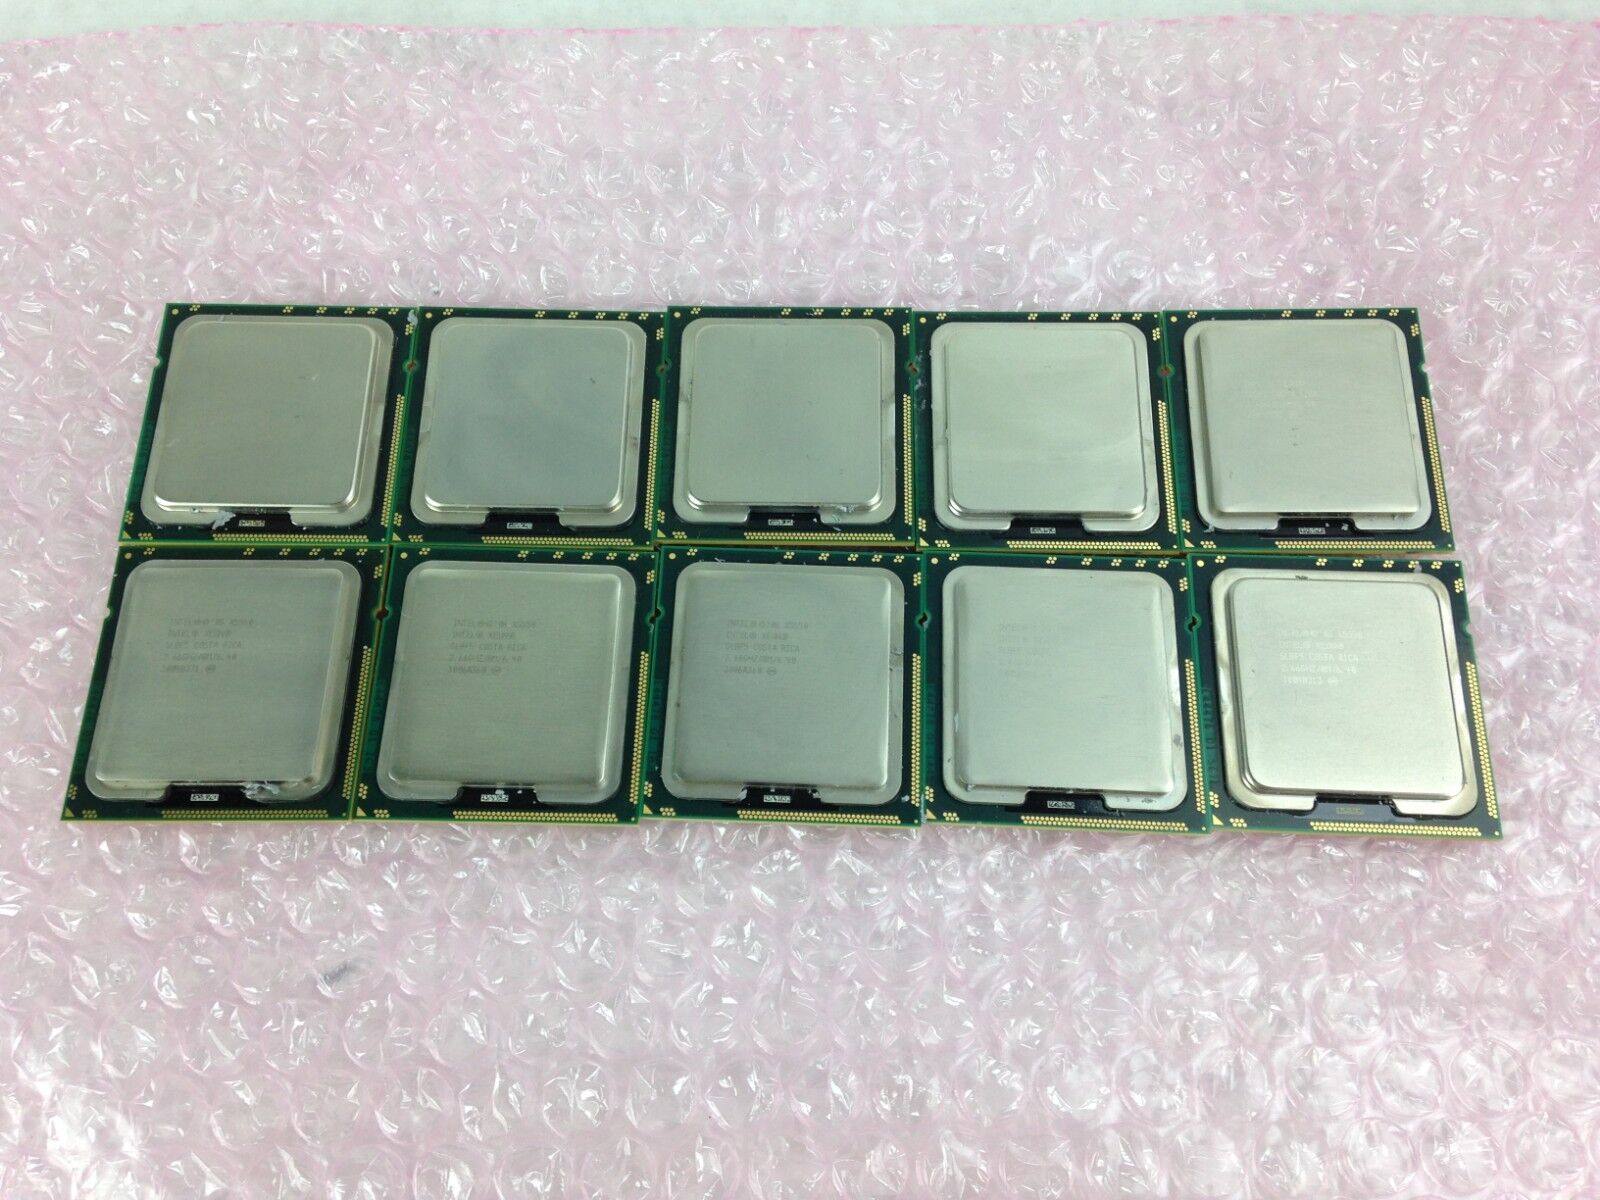 Intel Xeon X5550 CPU SLBF5 2.66 GHz LGA 1366 Quad Core Processor Lot of (10)